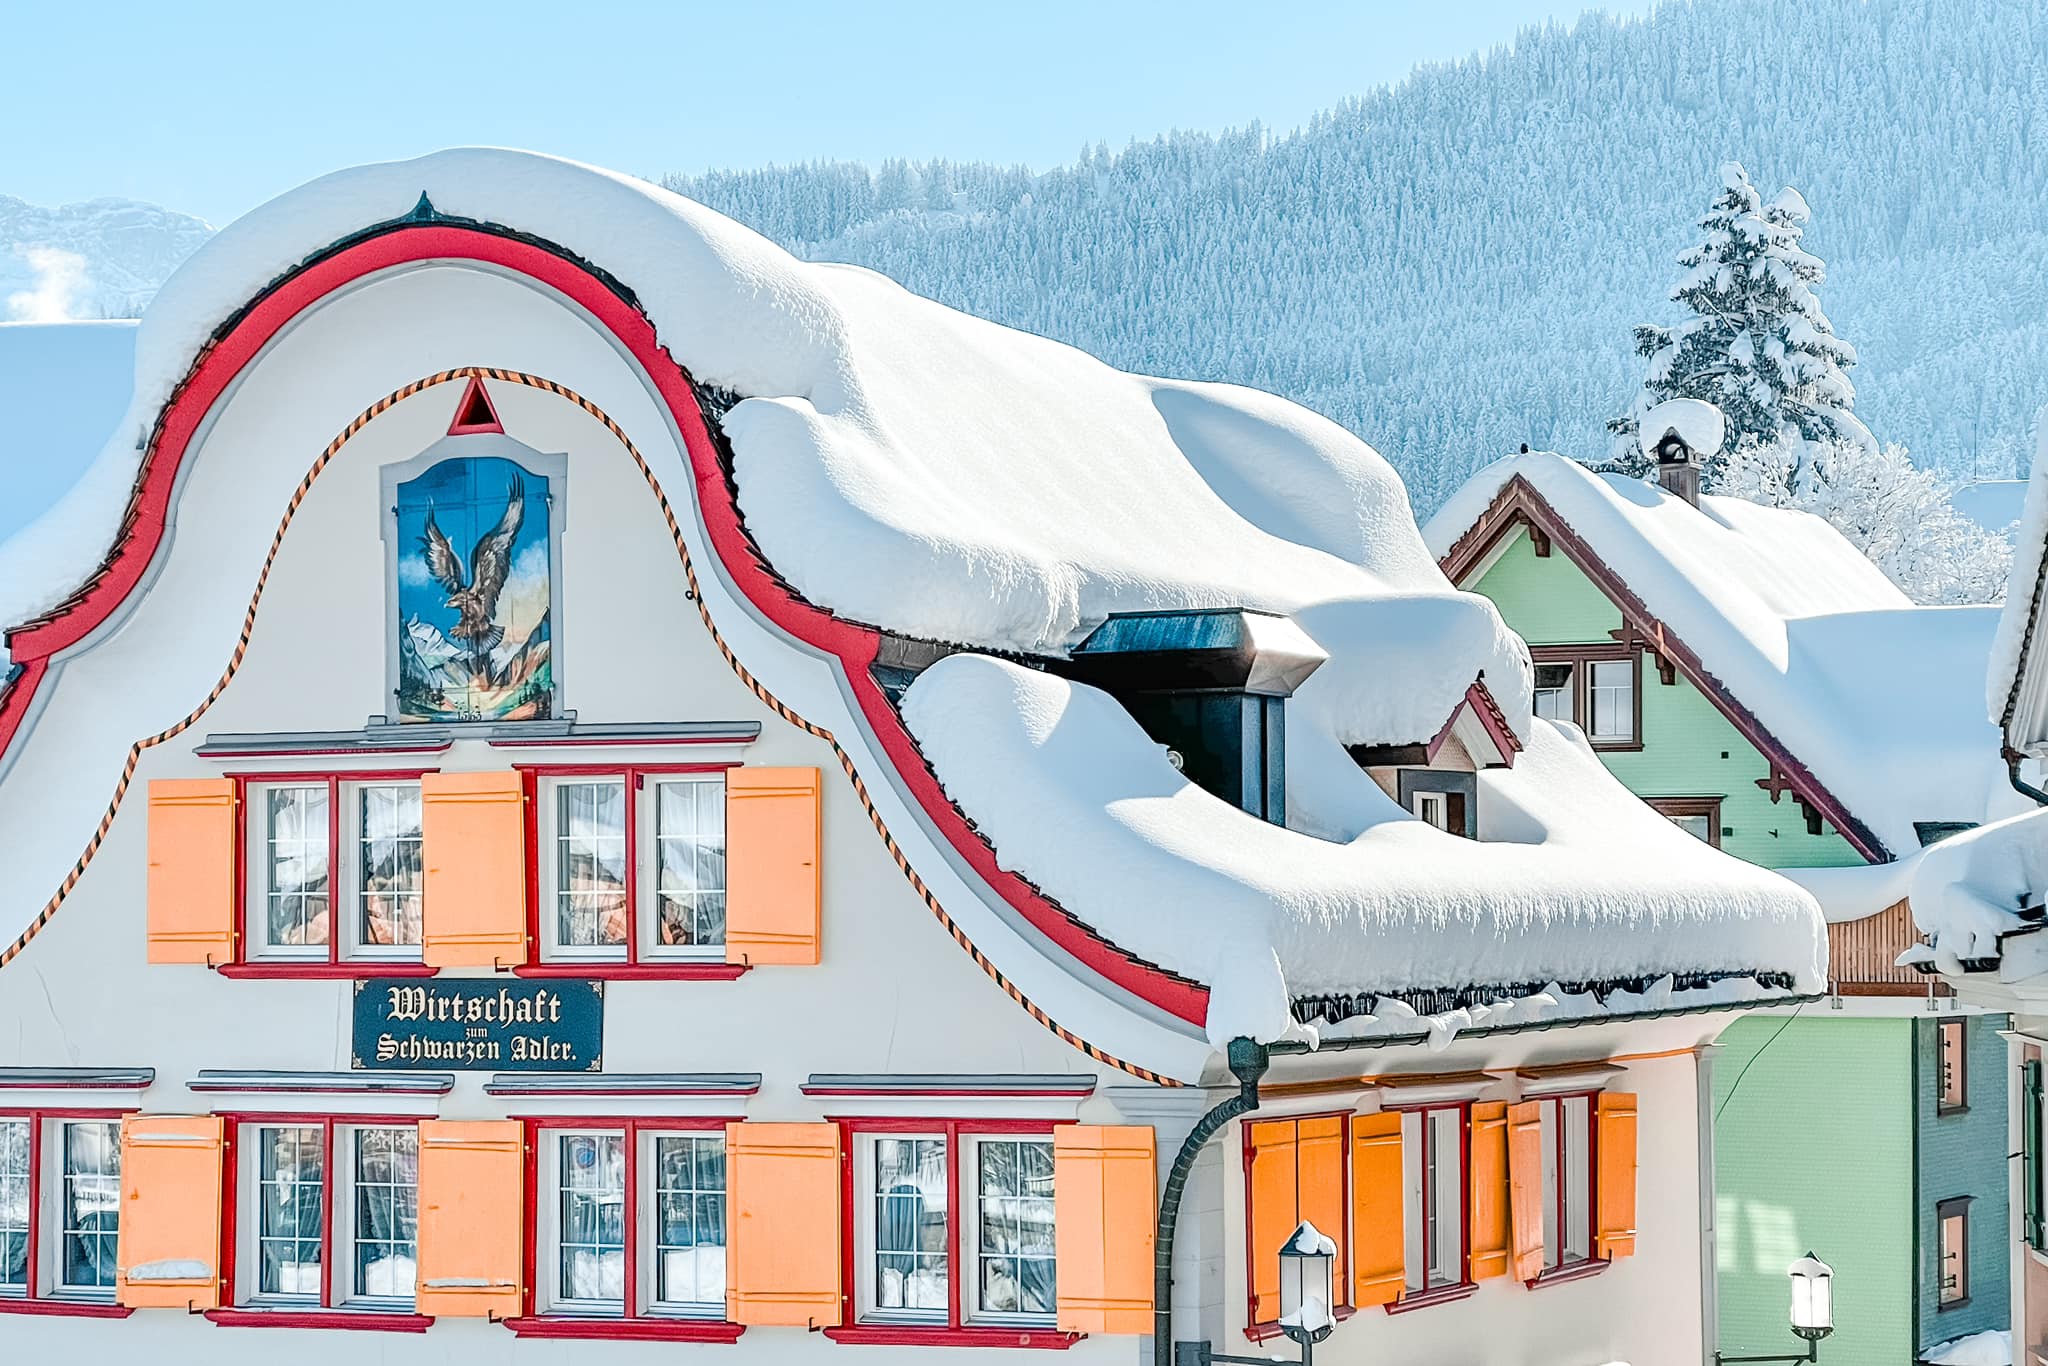 Discover Appenzell Switzerland